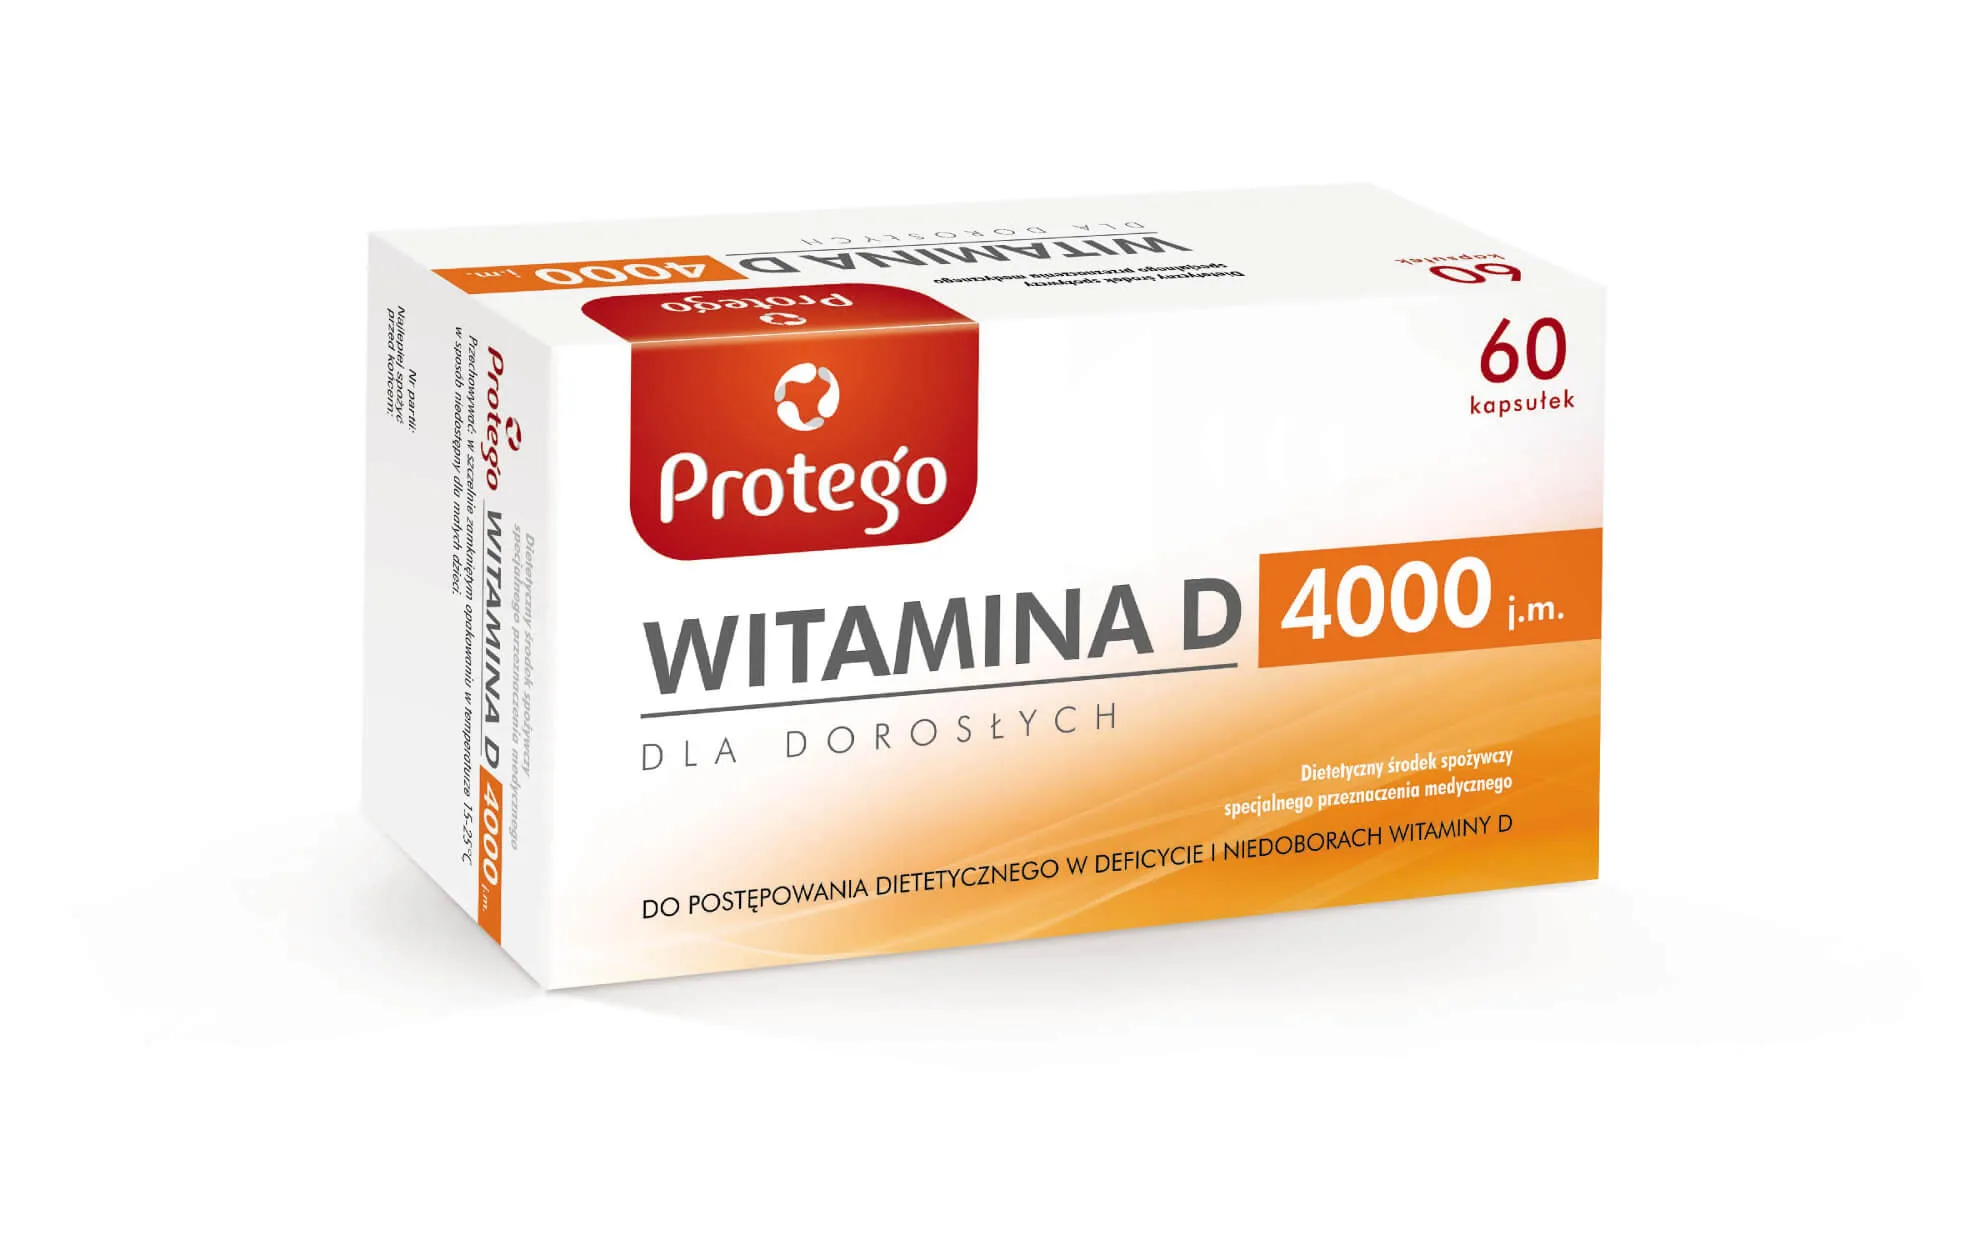 Protego Witamina D 4000, suplement diety, 60 kapsułek